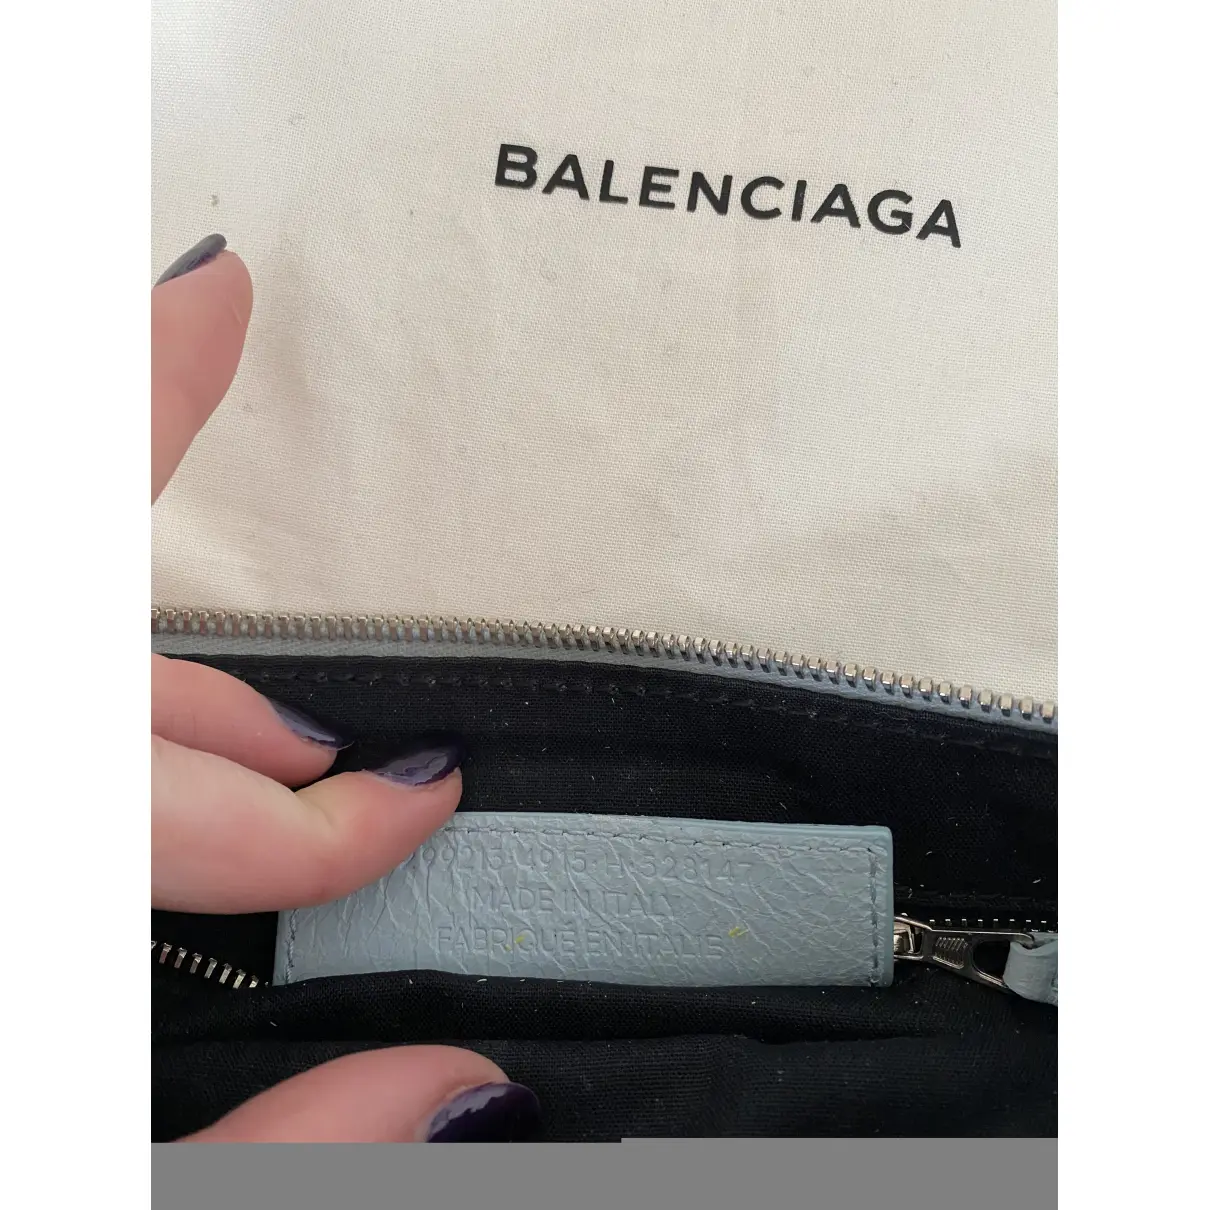 Buy Balenciaga City Clip leather clutch bag online